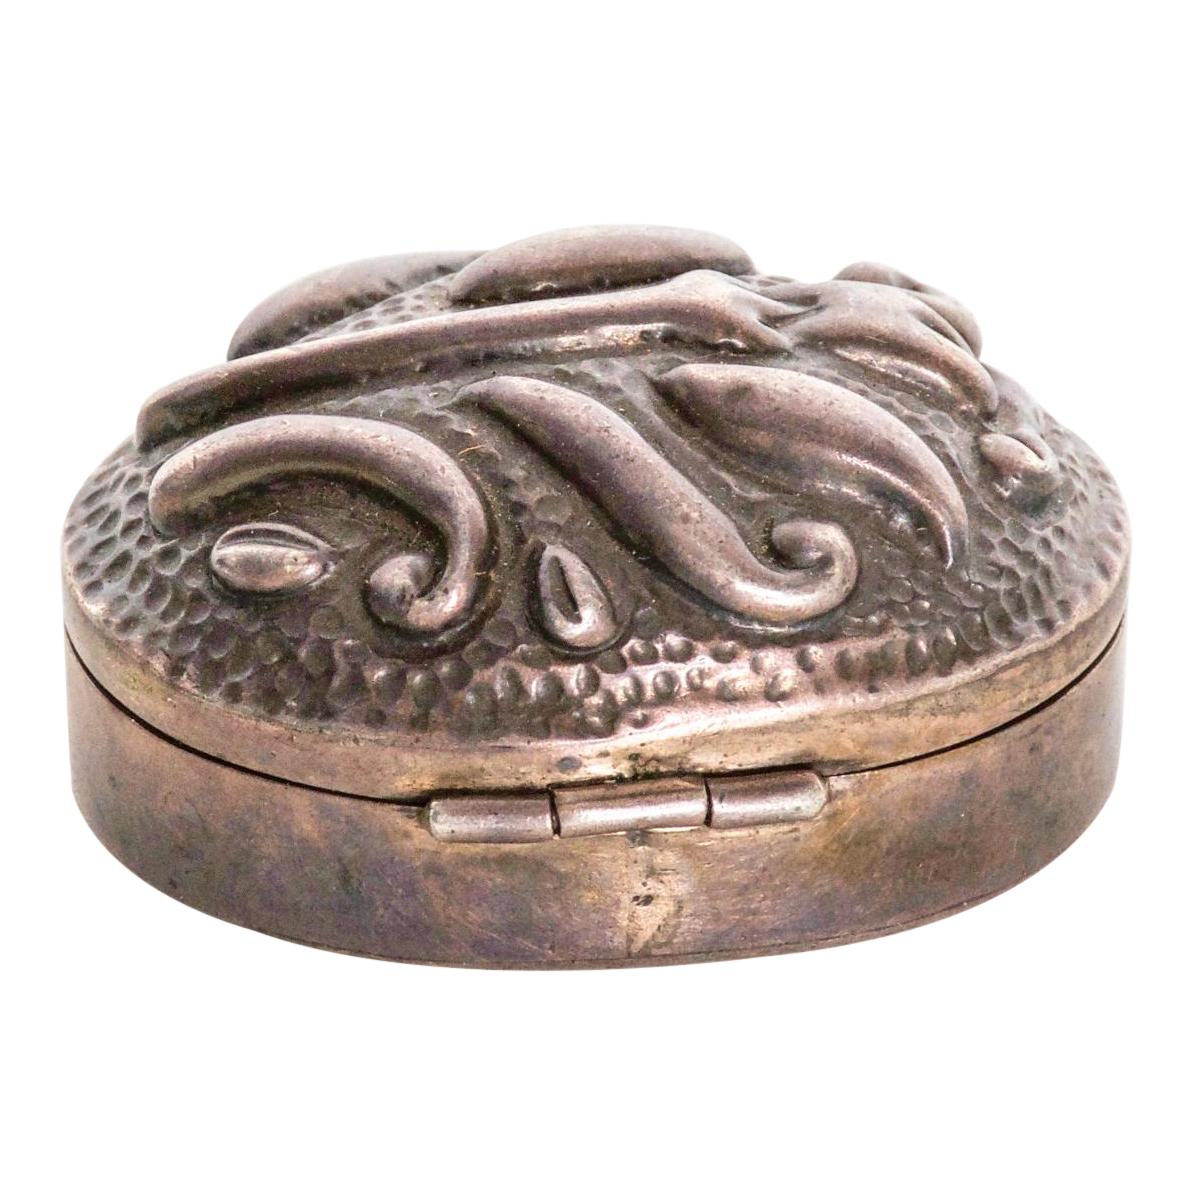 Silver Jewelry Small Oval Box, Taxco Mexico .925